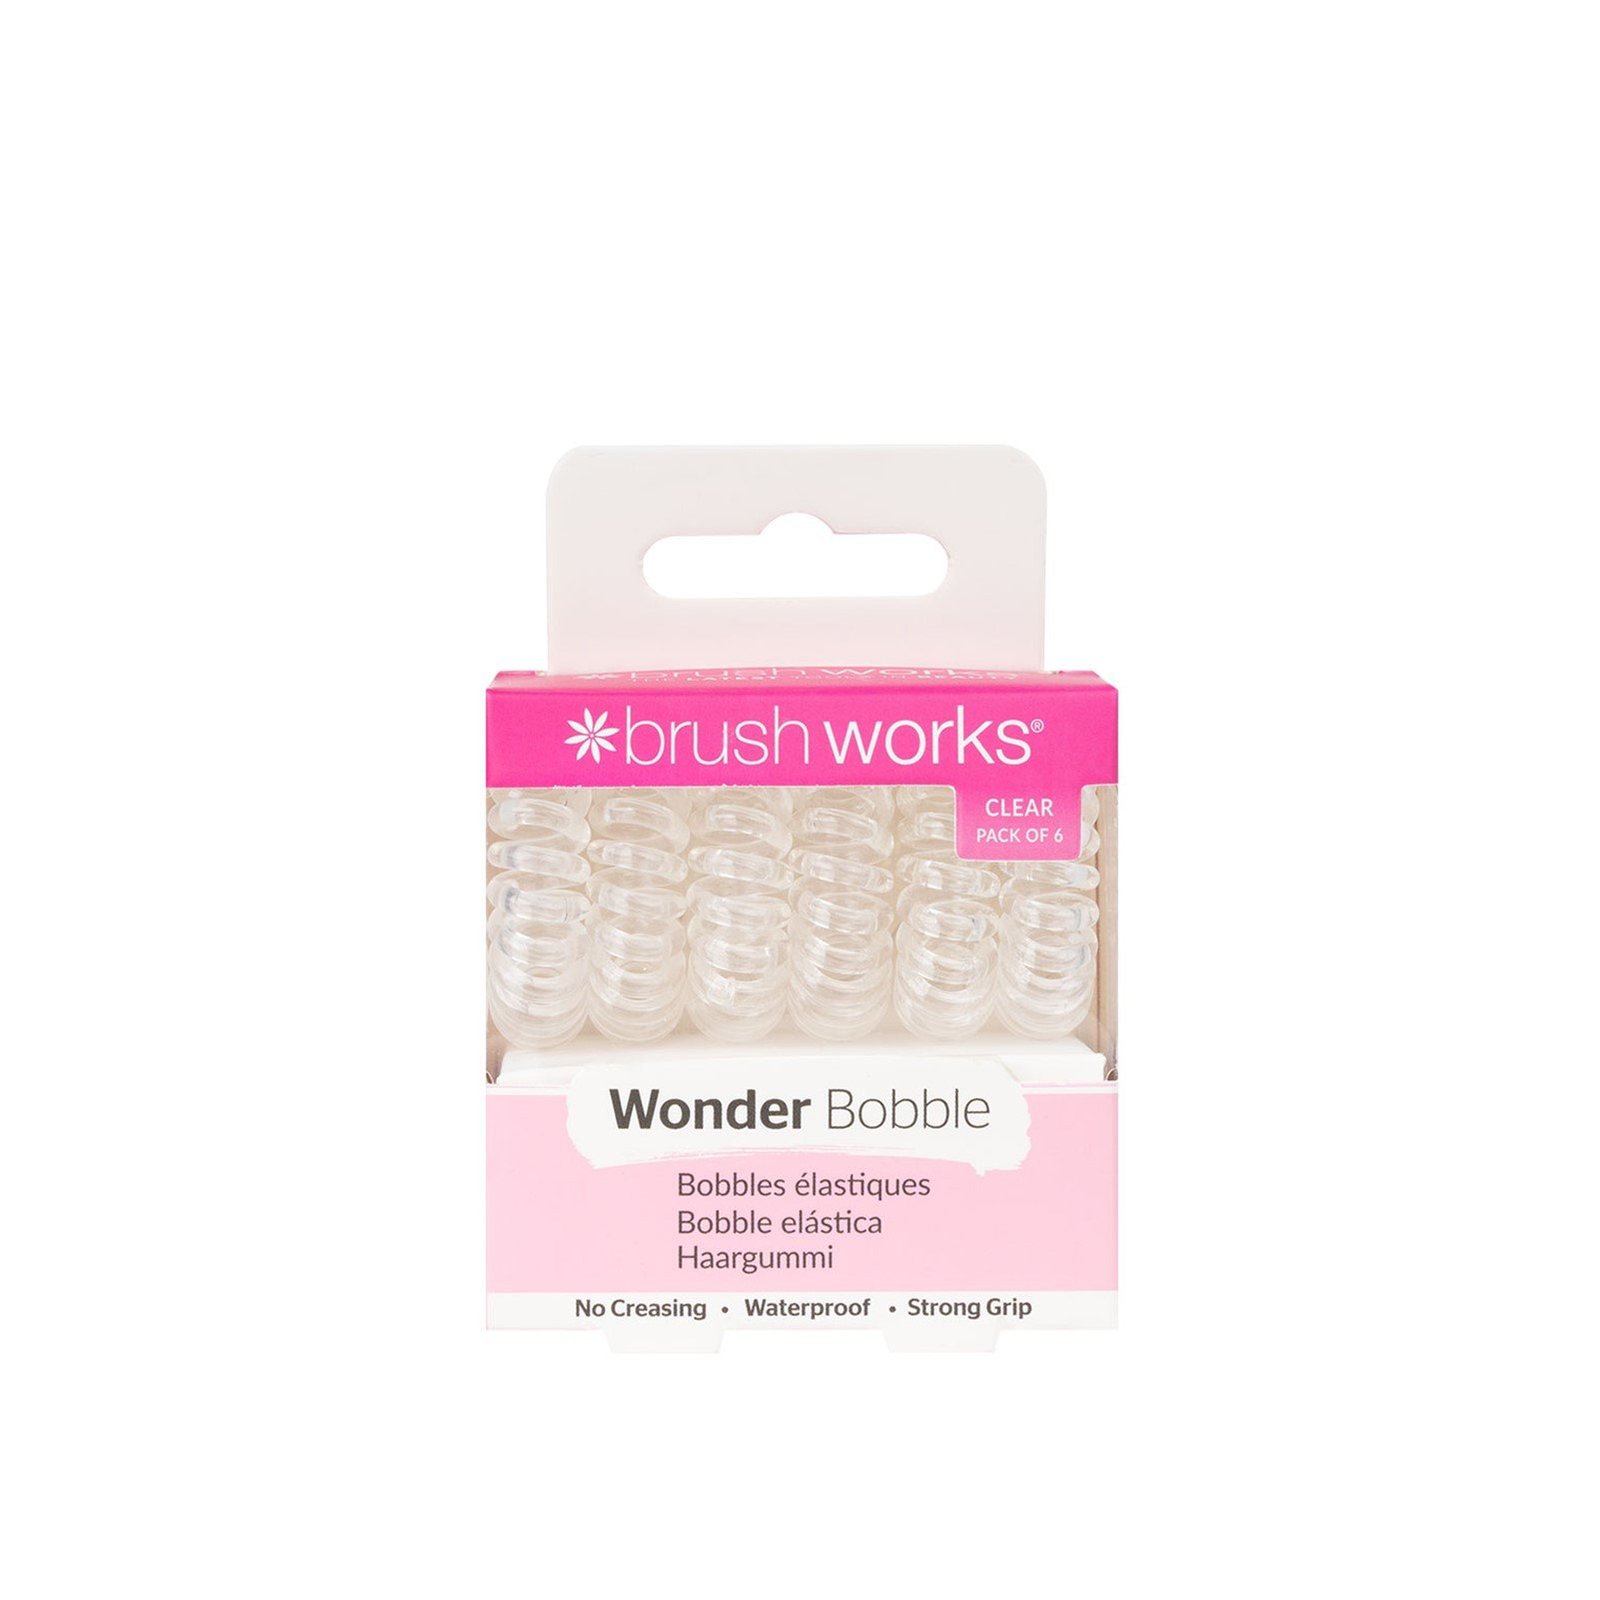 Brushworks Wonder Bobble Clear x6